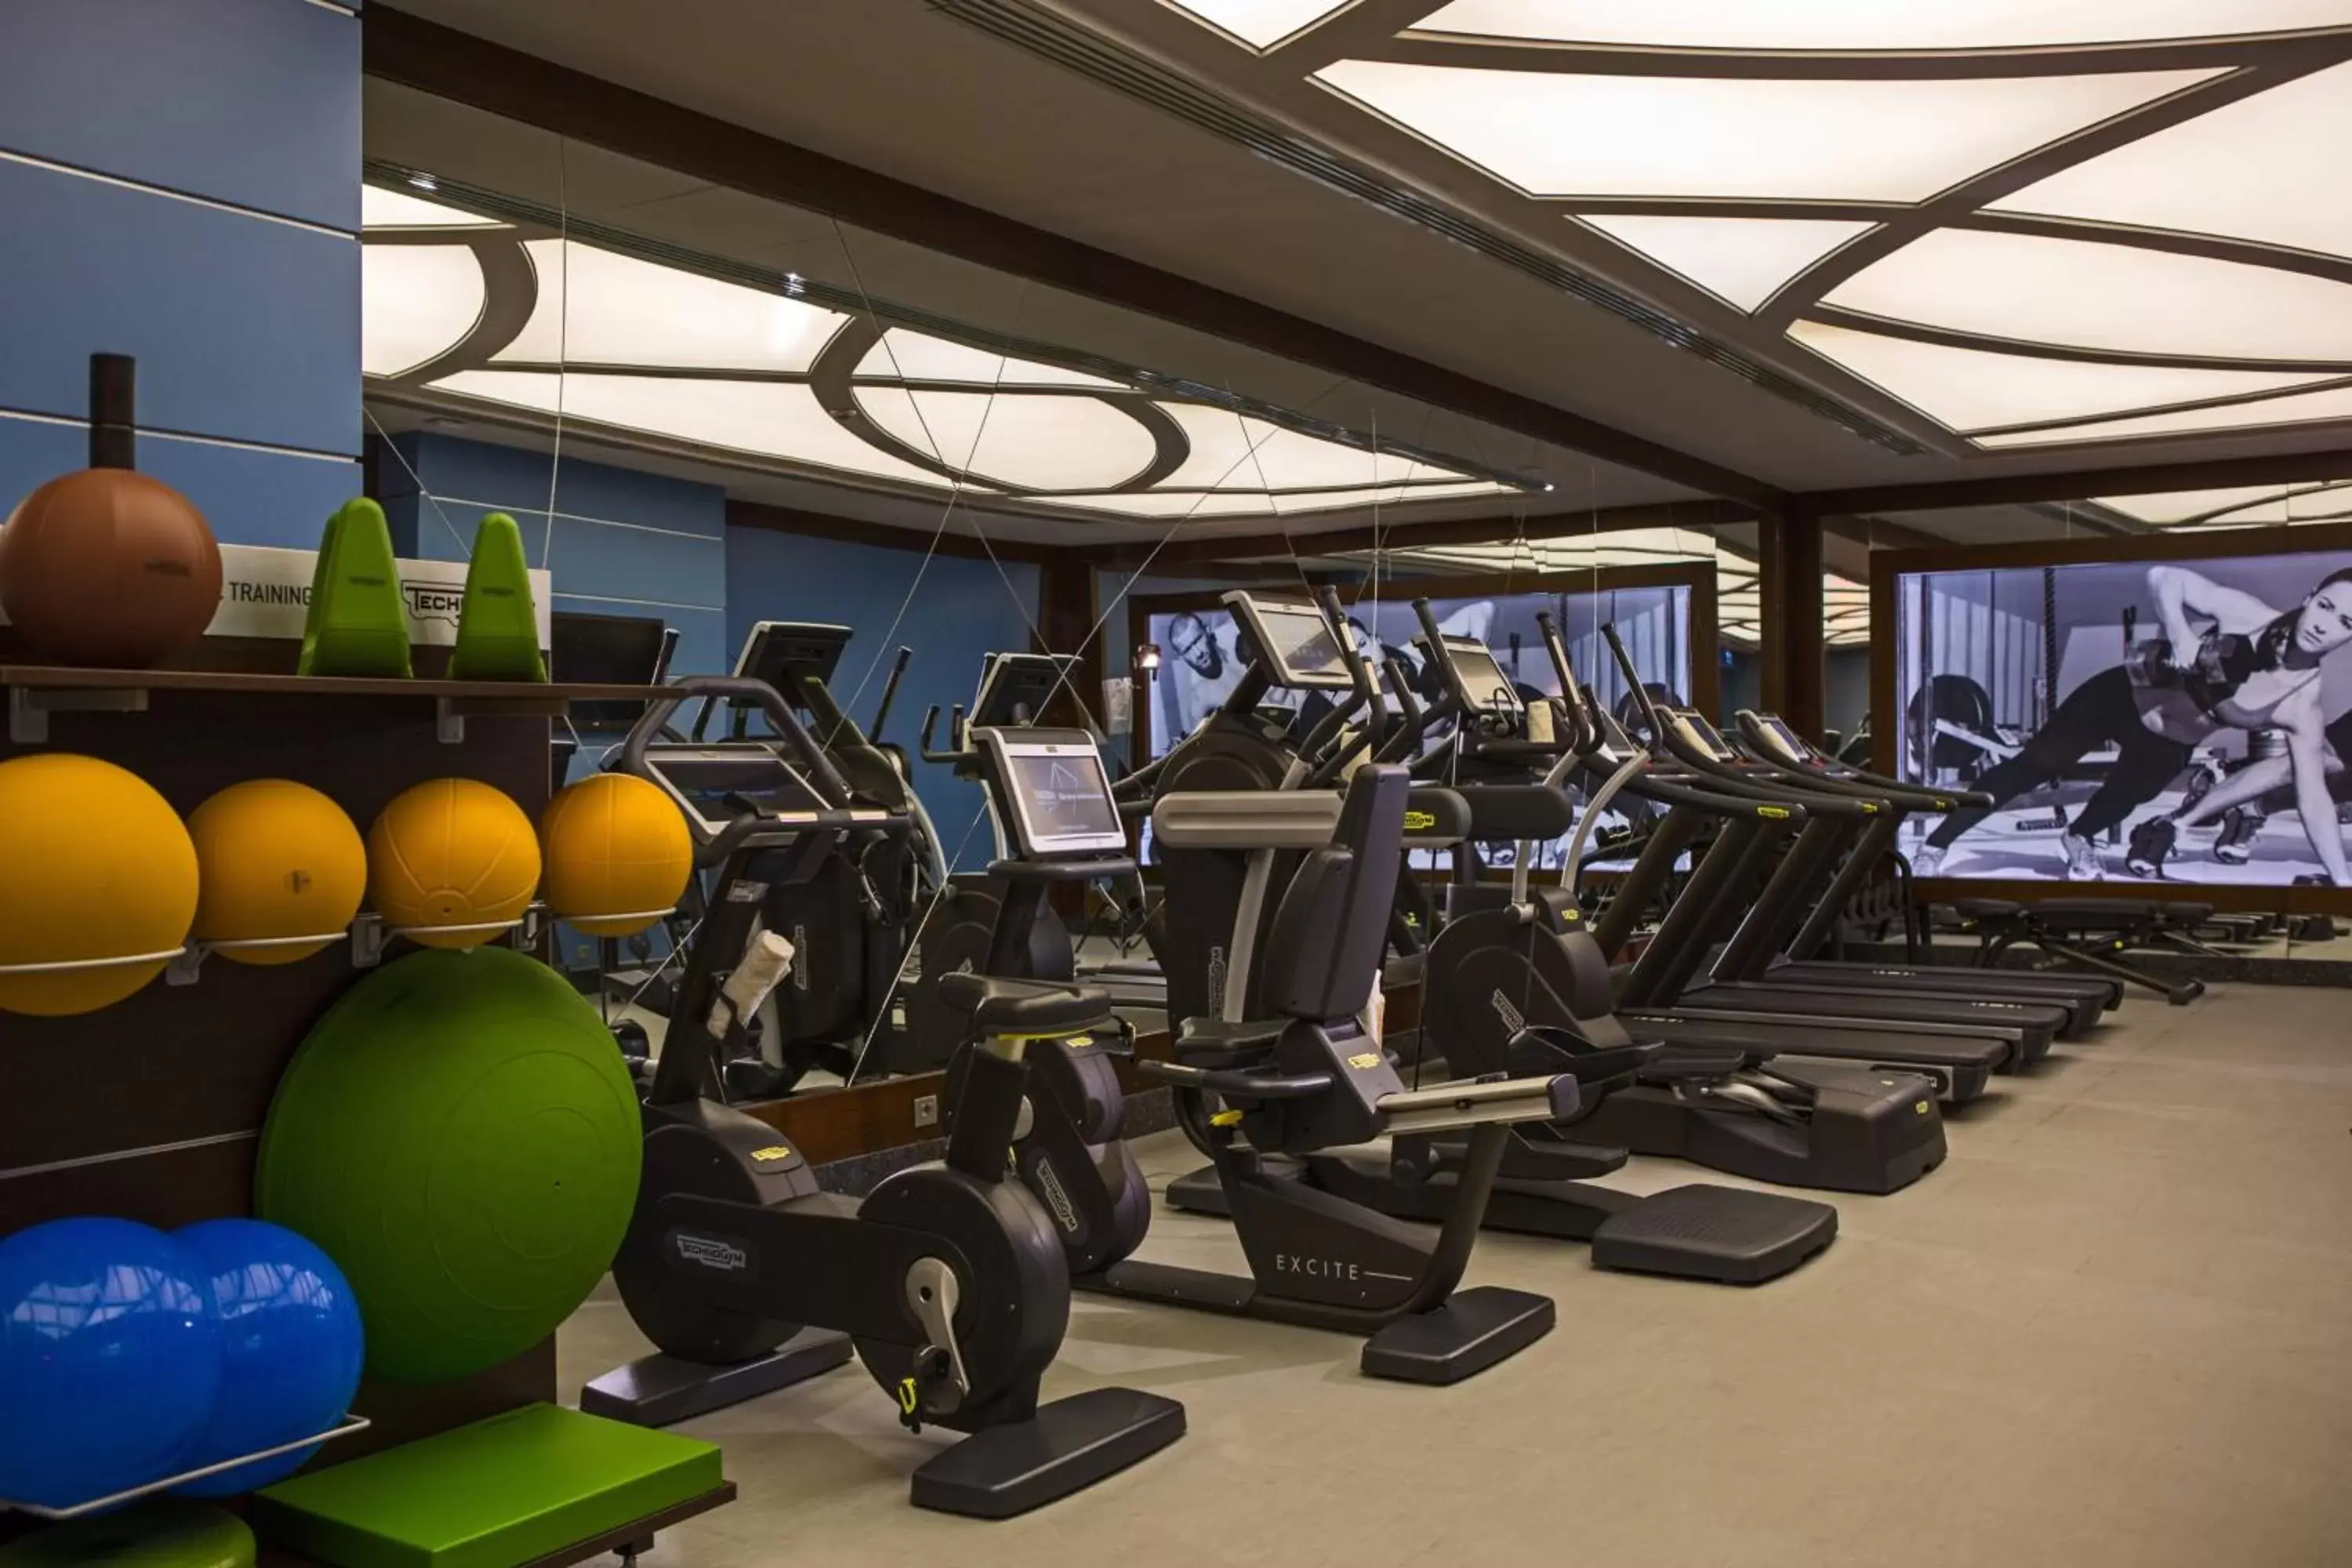 Fitness centre/facilities, Fitness Center/Facilities in Renaissance Izmir Hotel